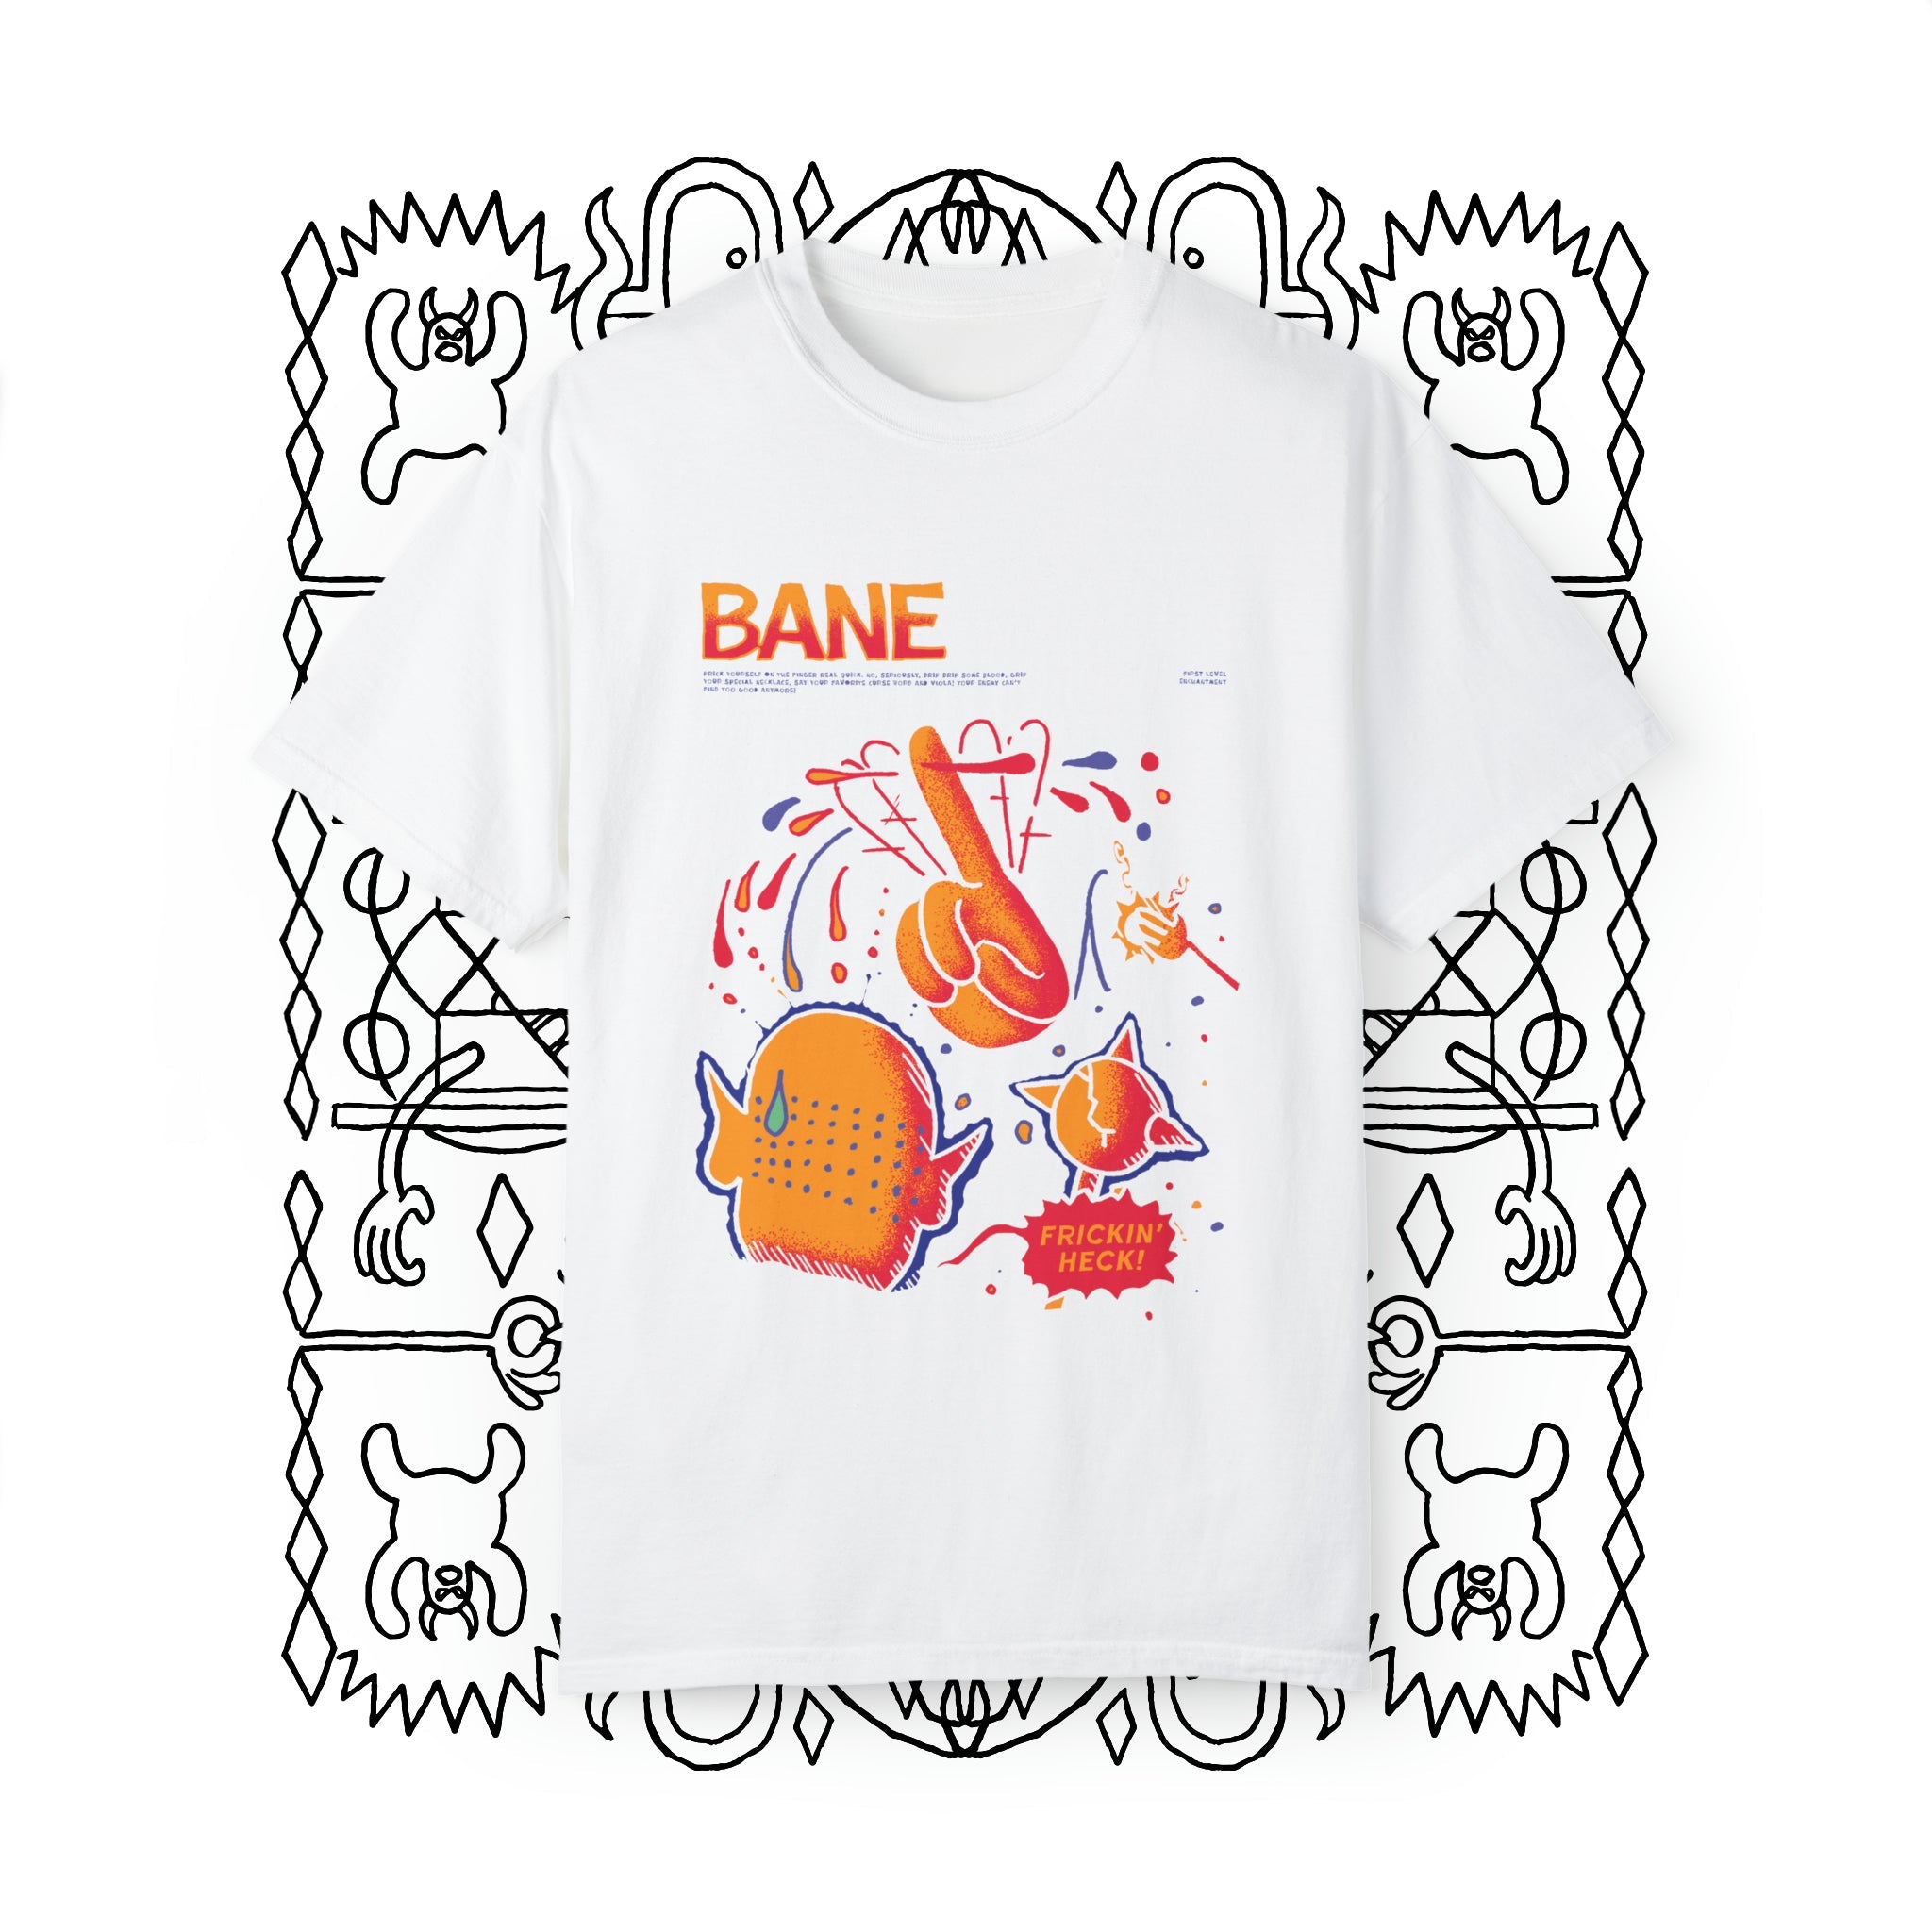 Bane | Comfort Colors T-Shirt - T-Shirt - Ace of Gnomes - 32774210664370099502